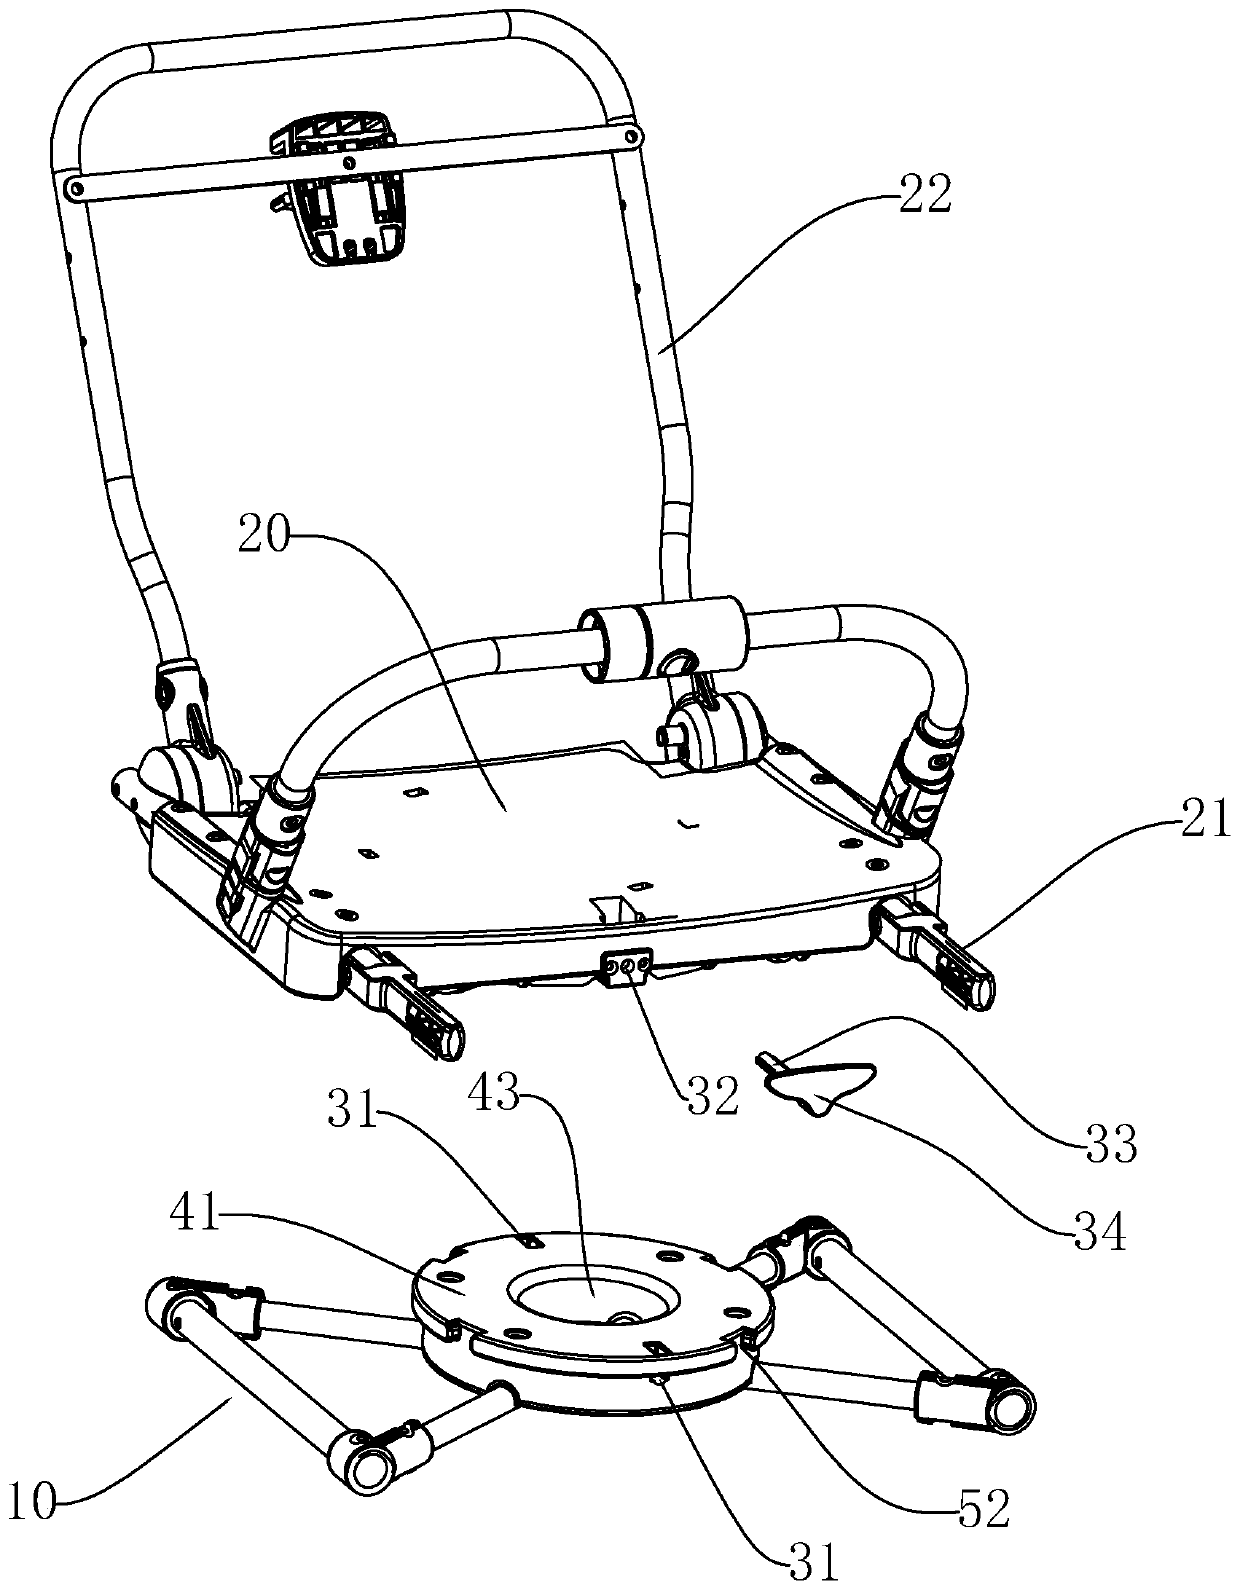 Seat reversing mechanism and baby stroller